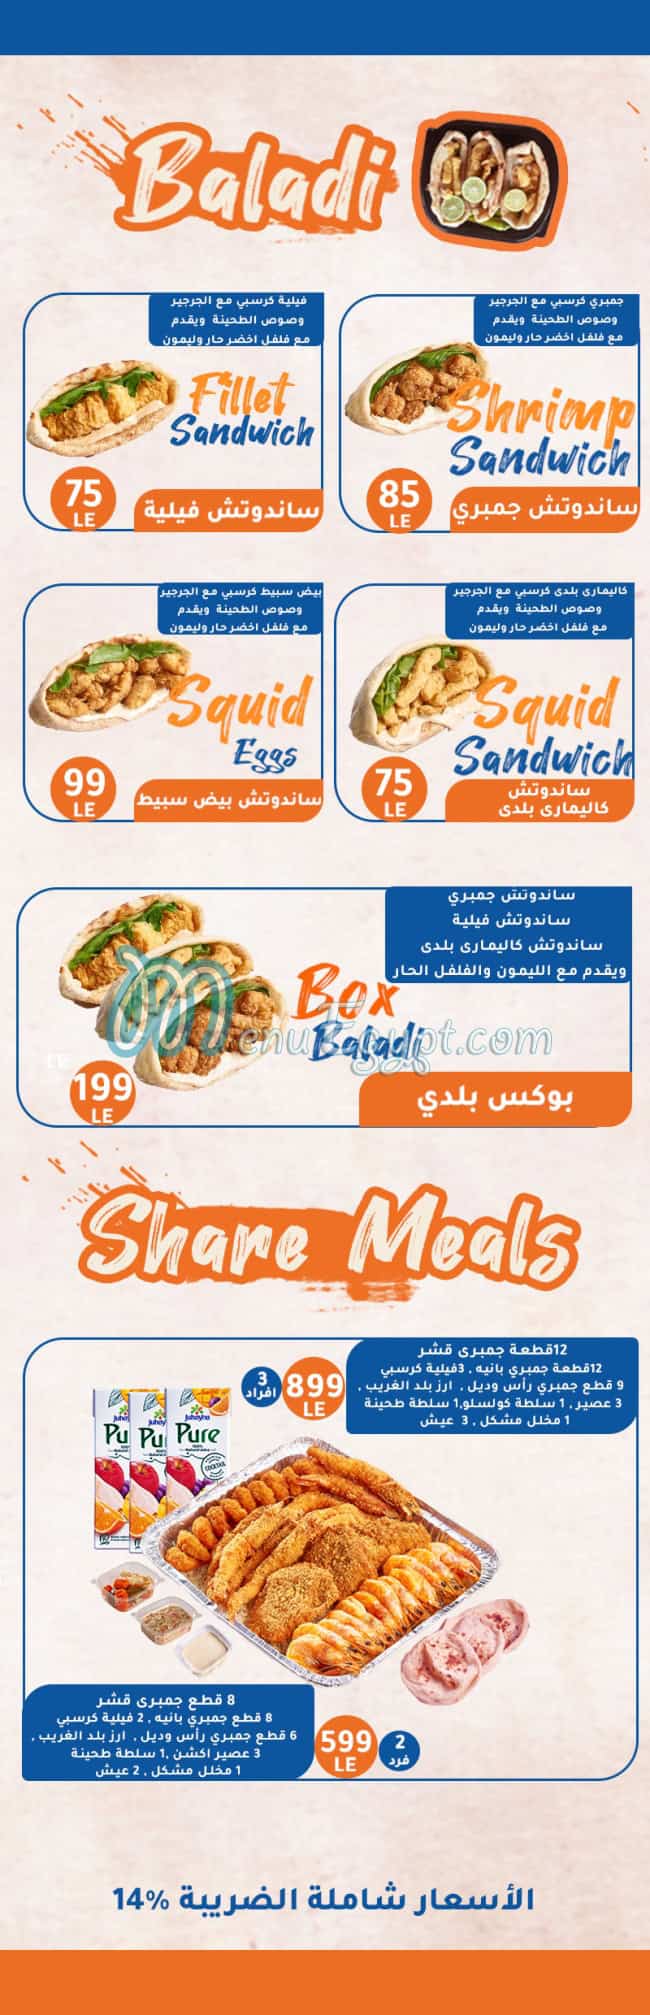 Balad El Gharieb menu Egypt 1